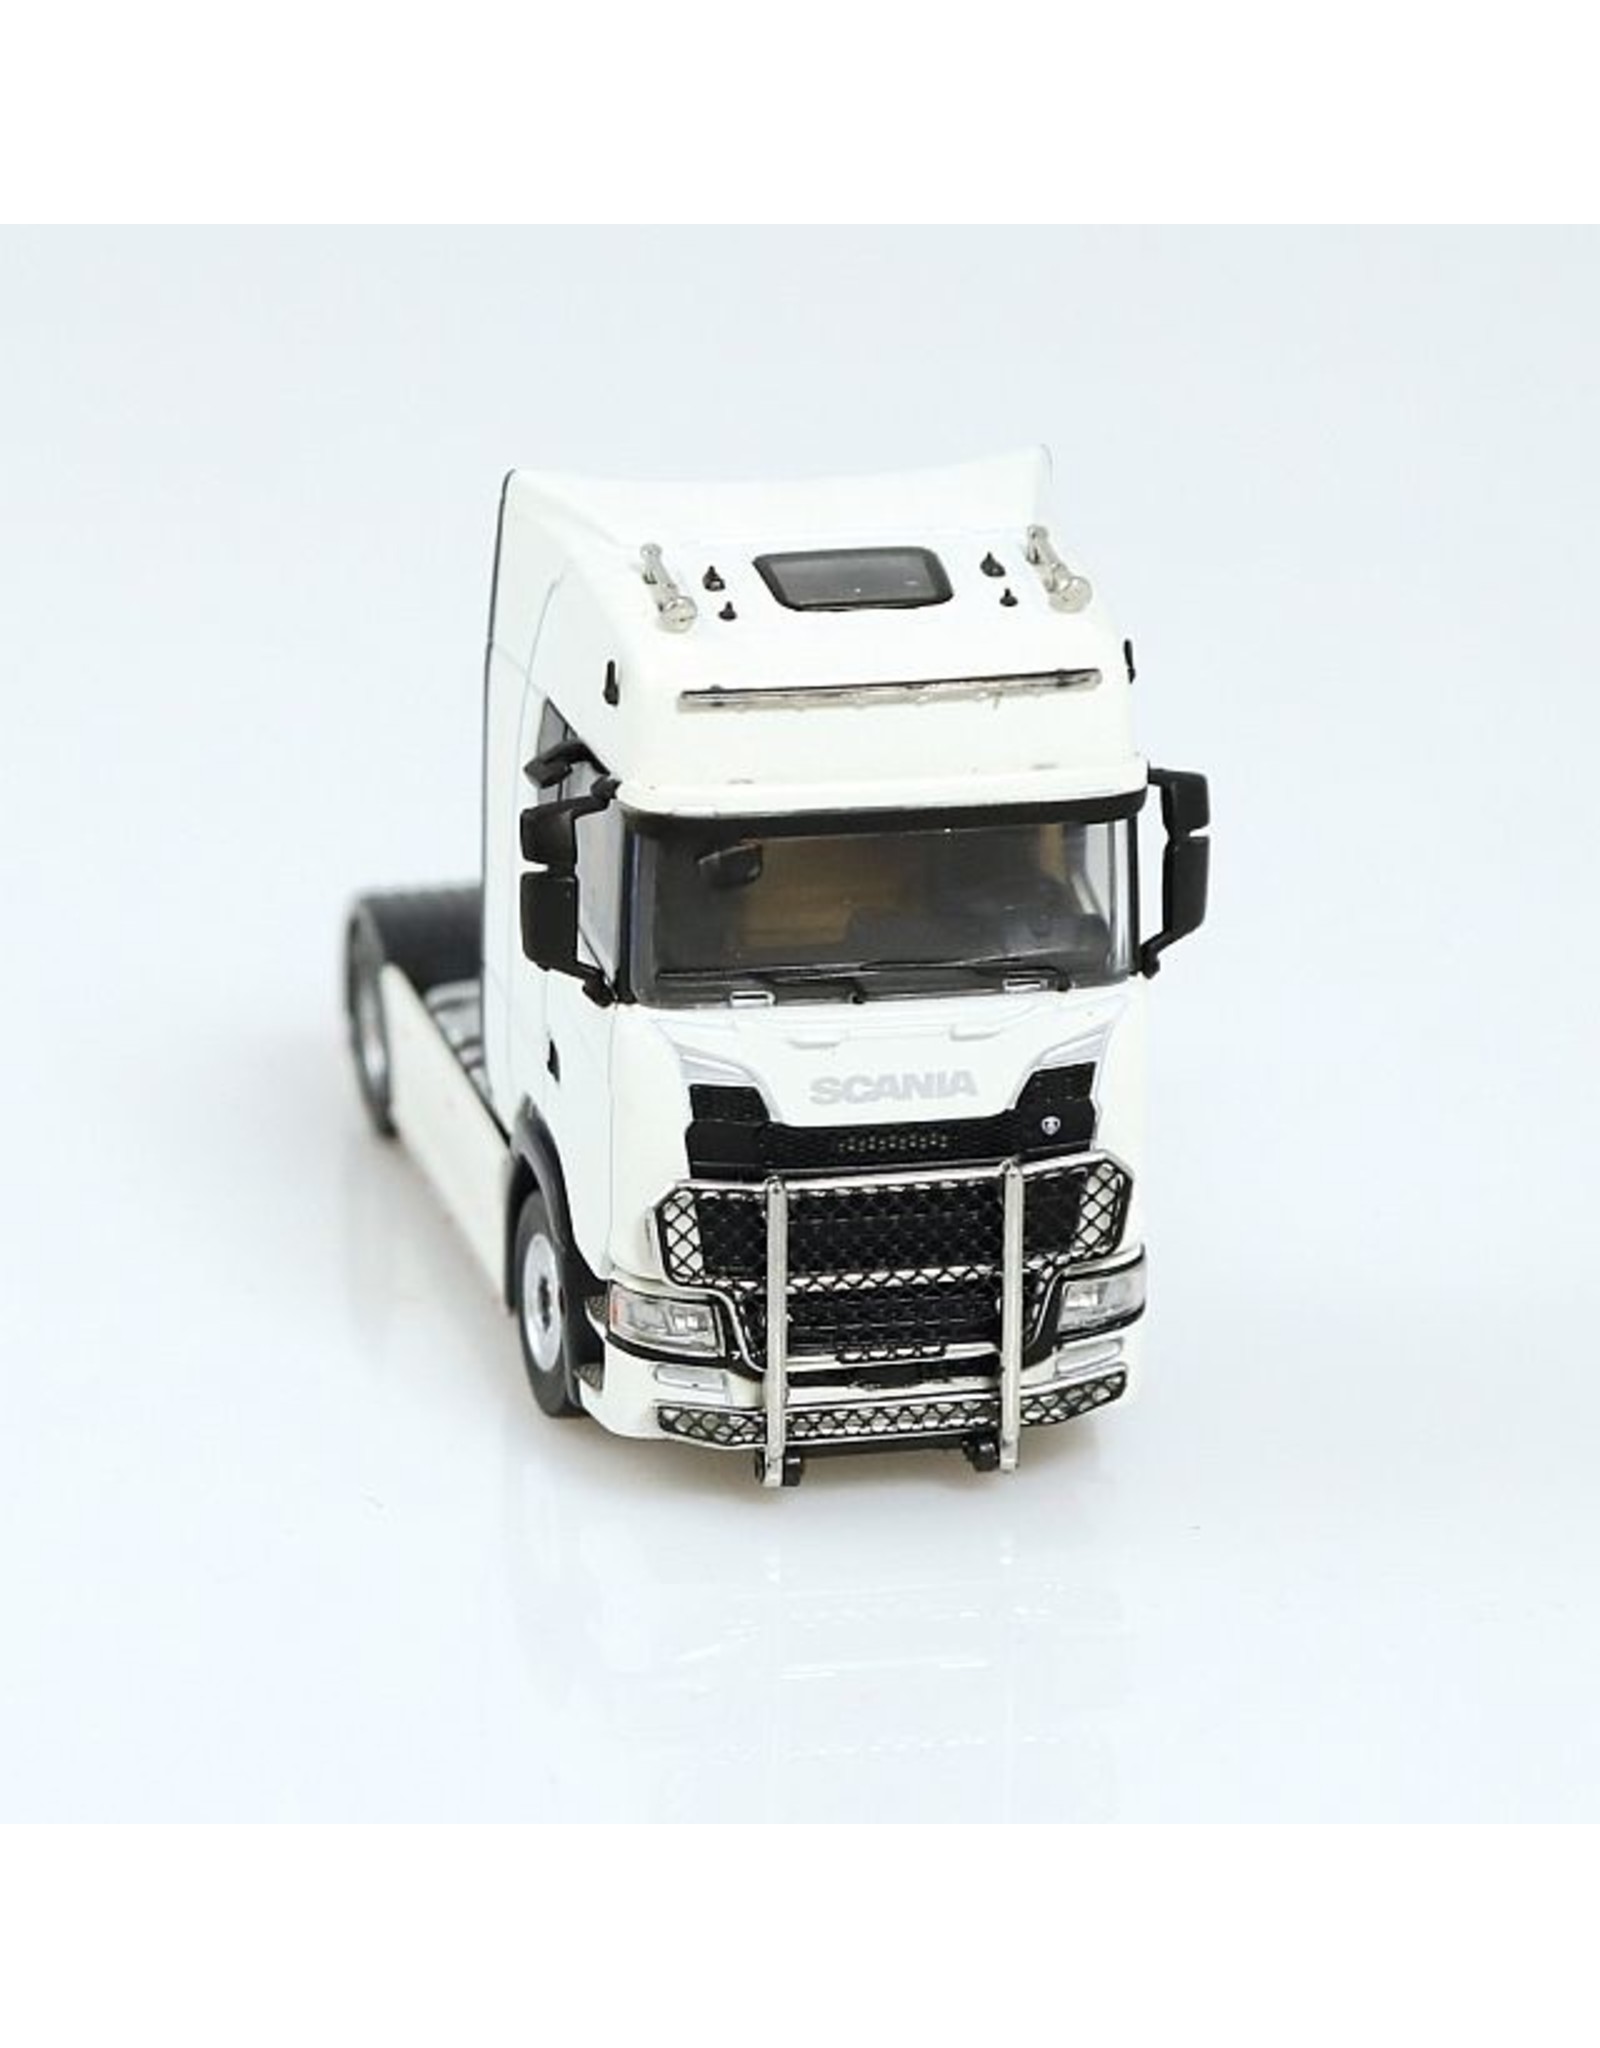 Scania Scania V8 730S single truck(white).